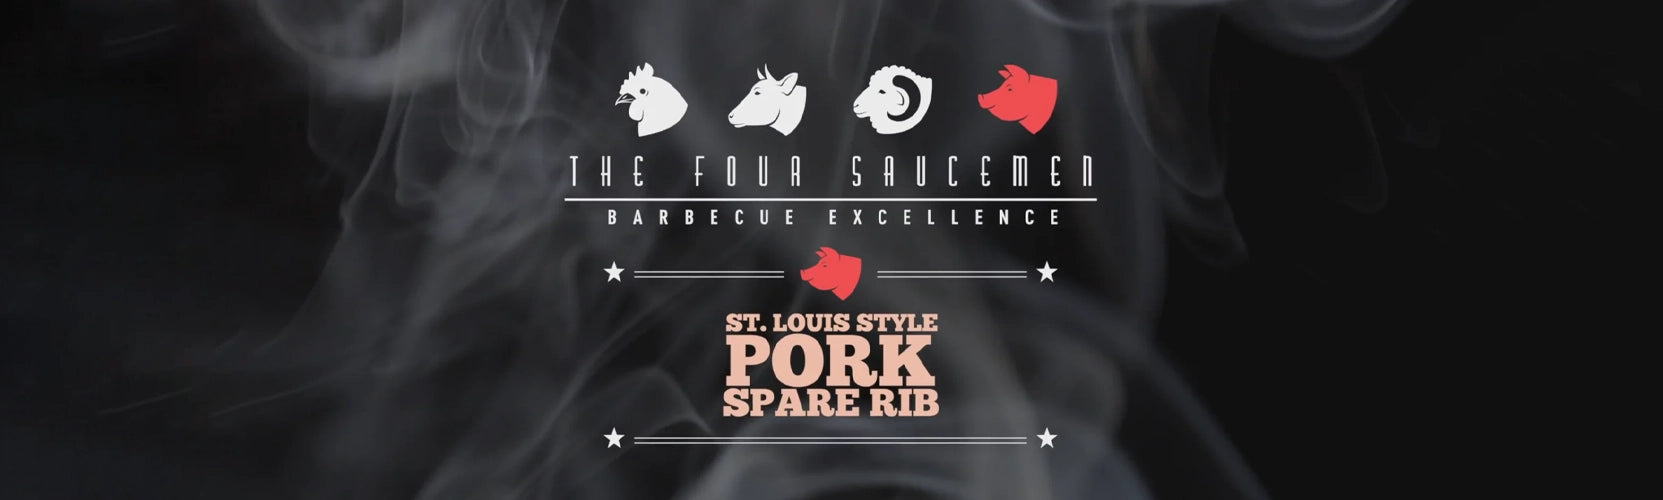 Pork Ribs by The Four Saucemen